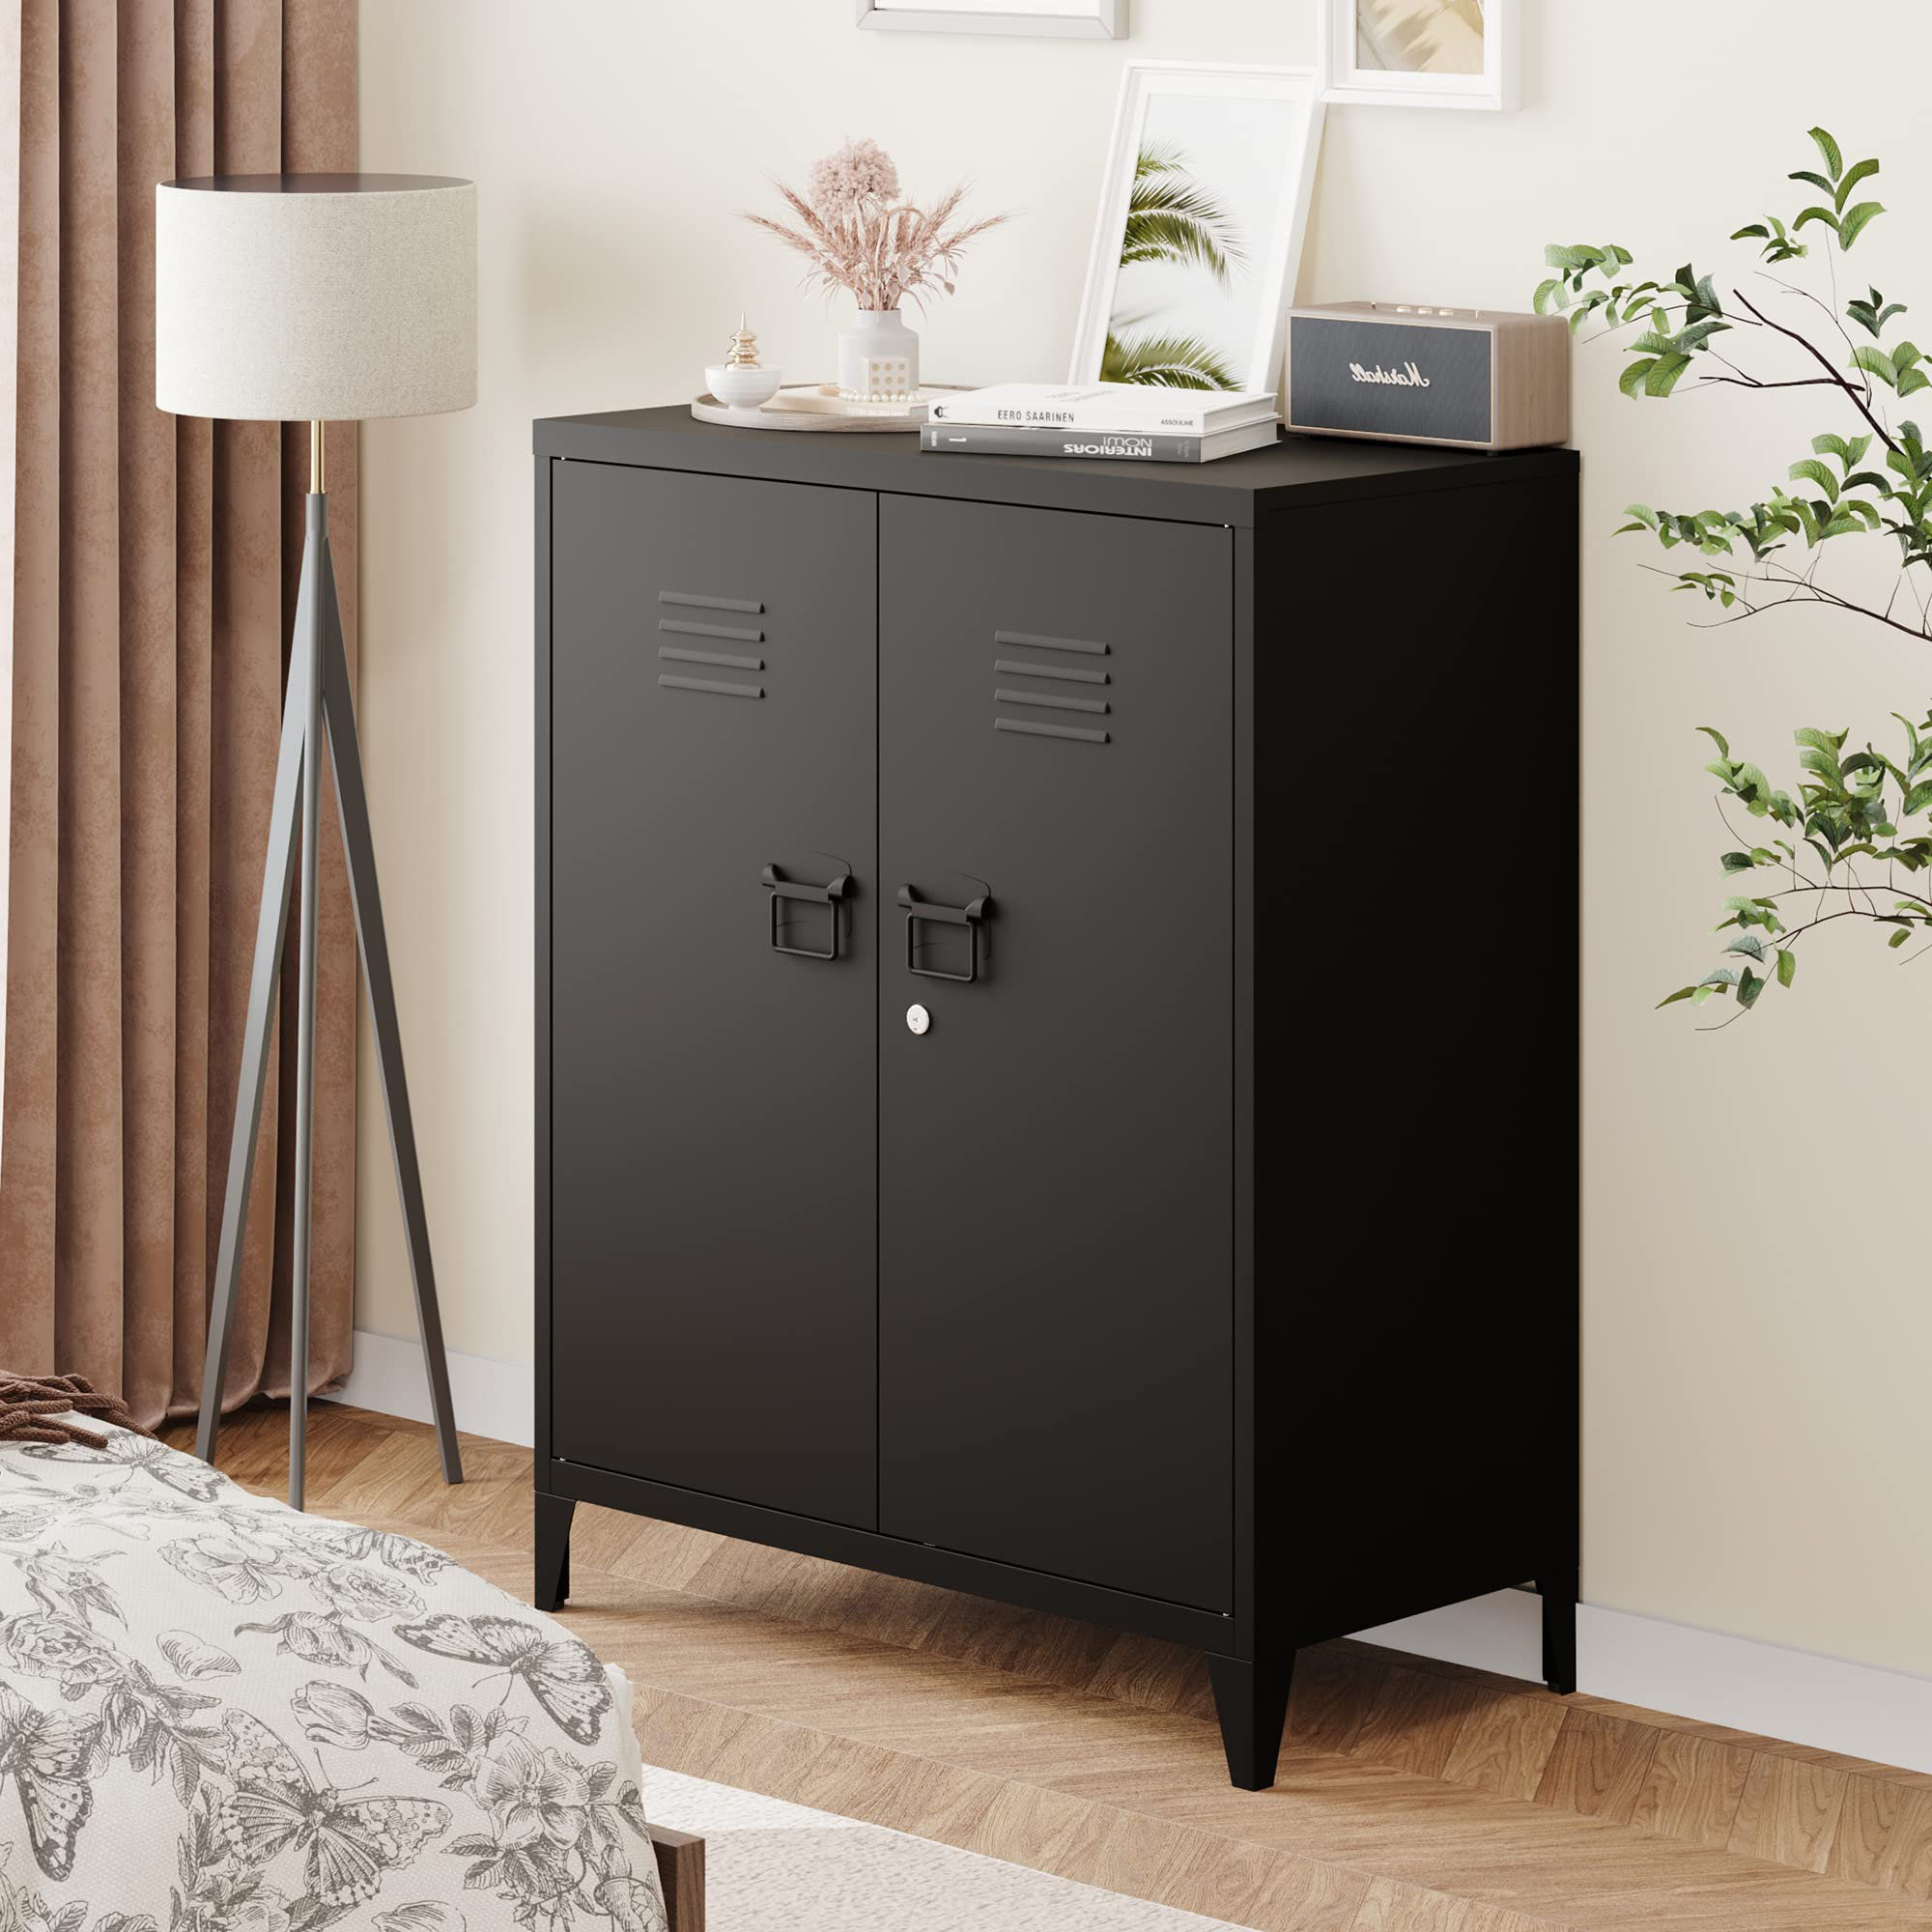 Locker Locks: Cabinet / Furniture & Desk, Drawer Locks